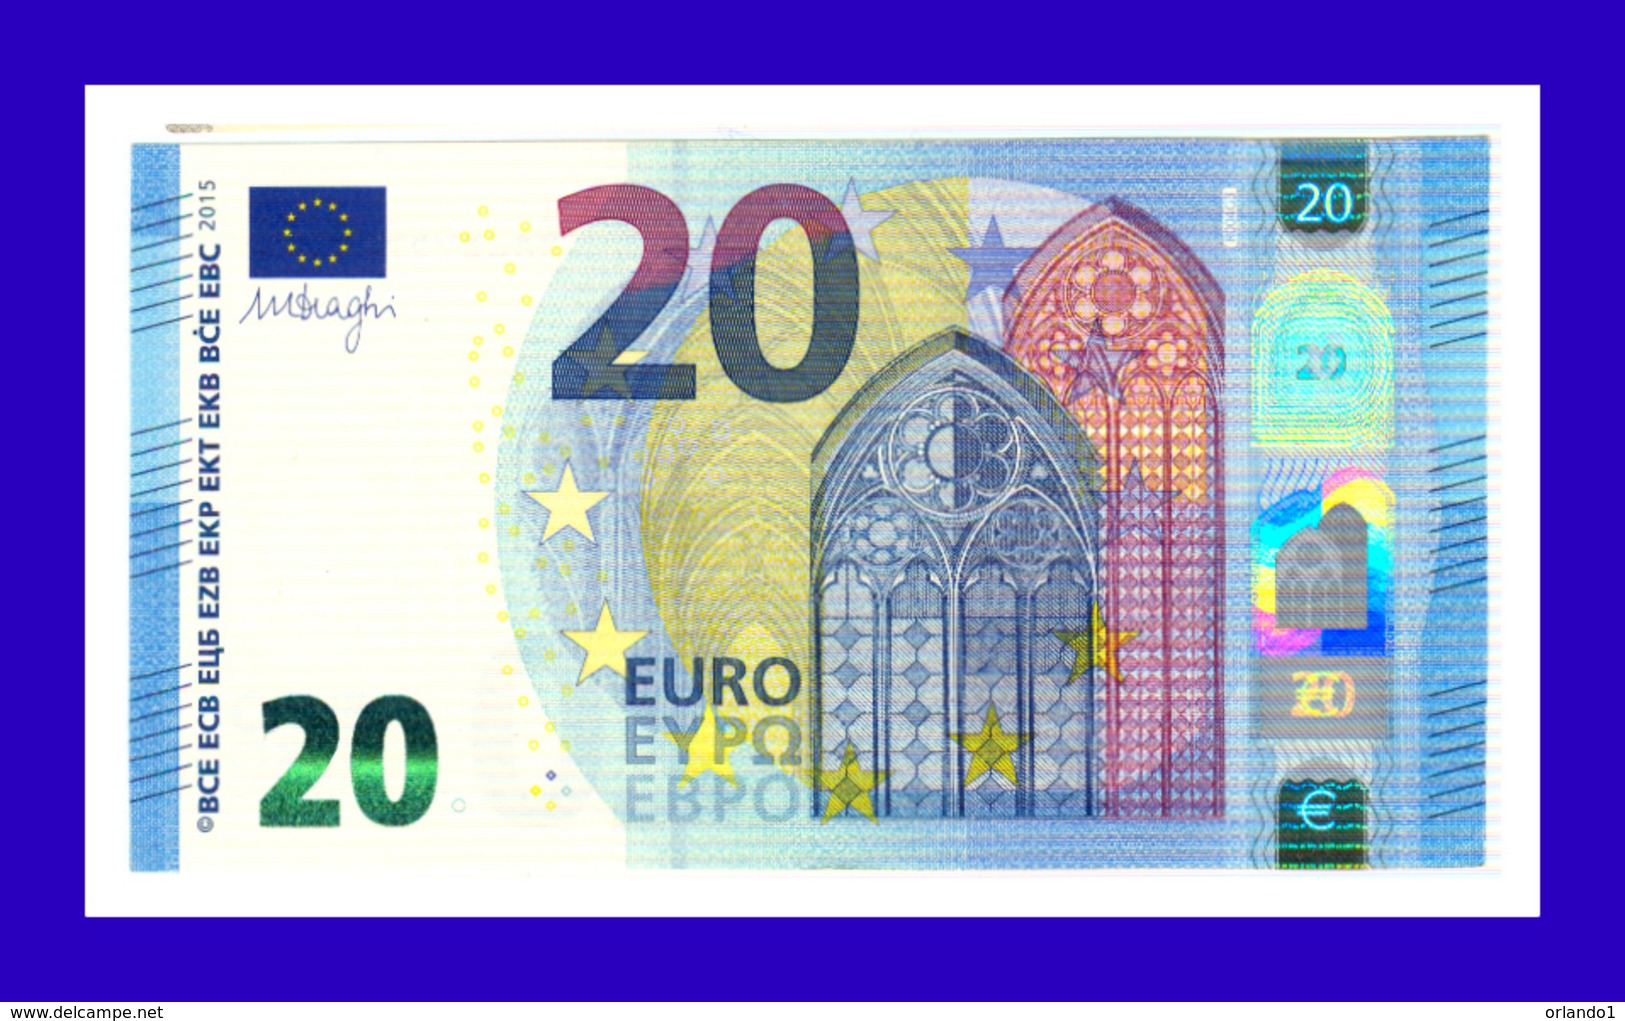 20 EURO "RA" BERLIN DRAGHI  R004 G3 UNC SEE SCAN!!!!! - 20 Euro